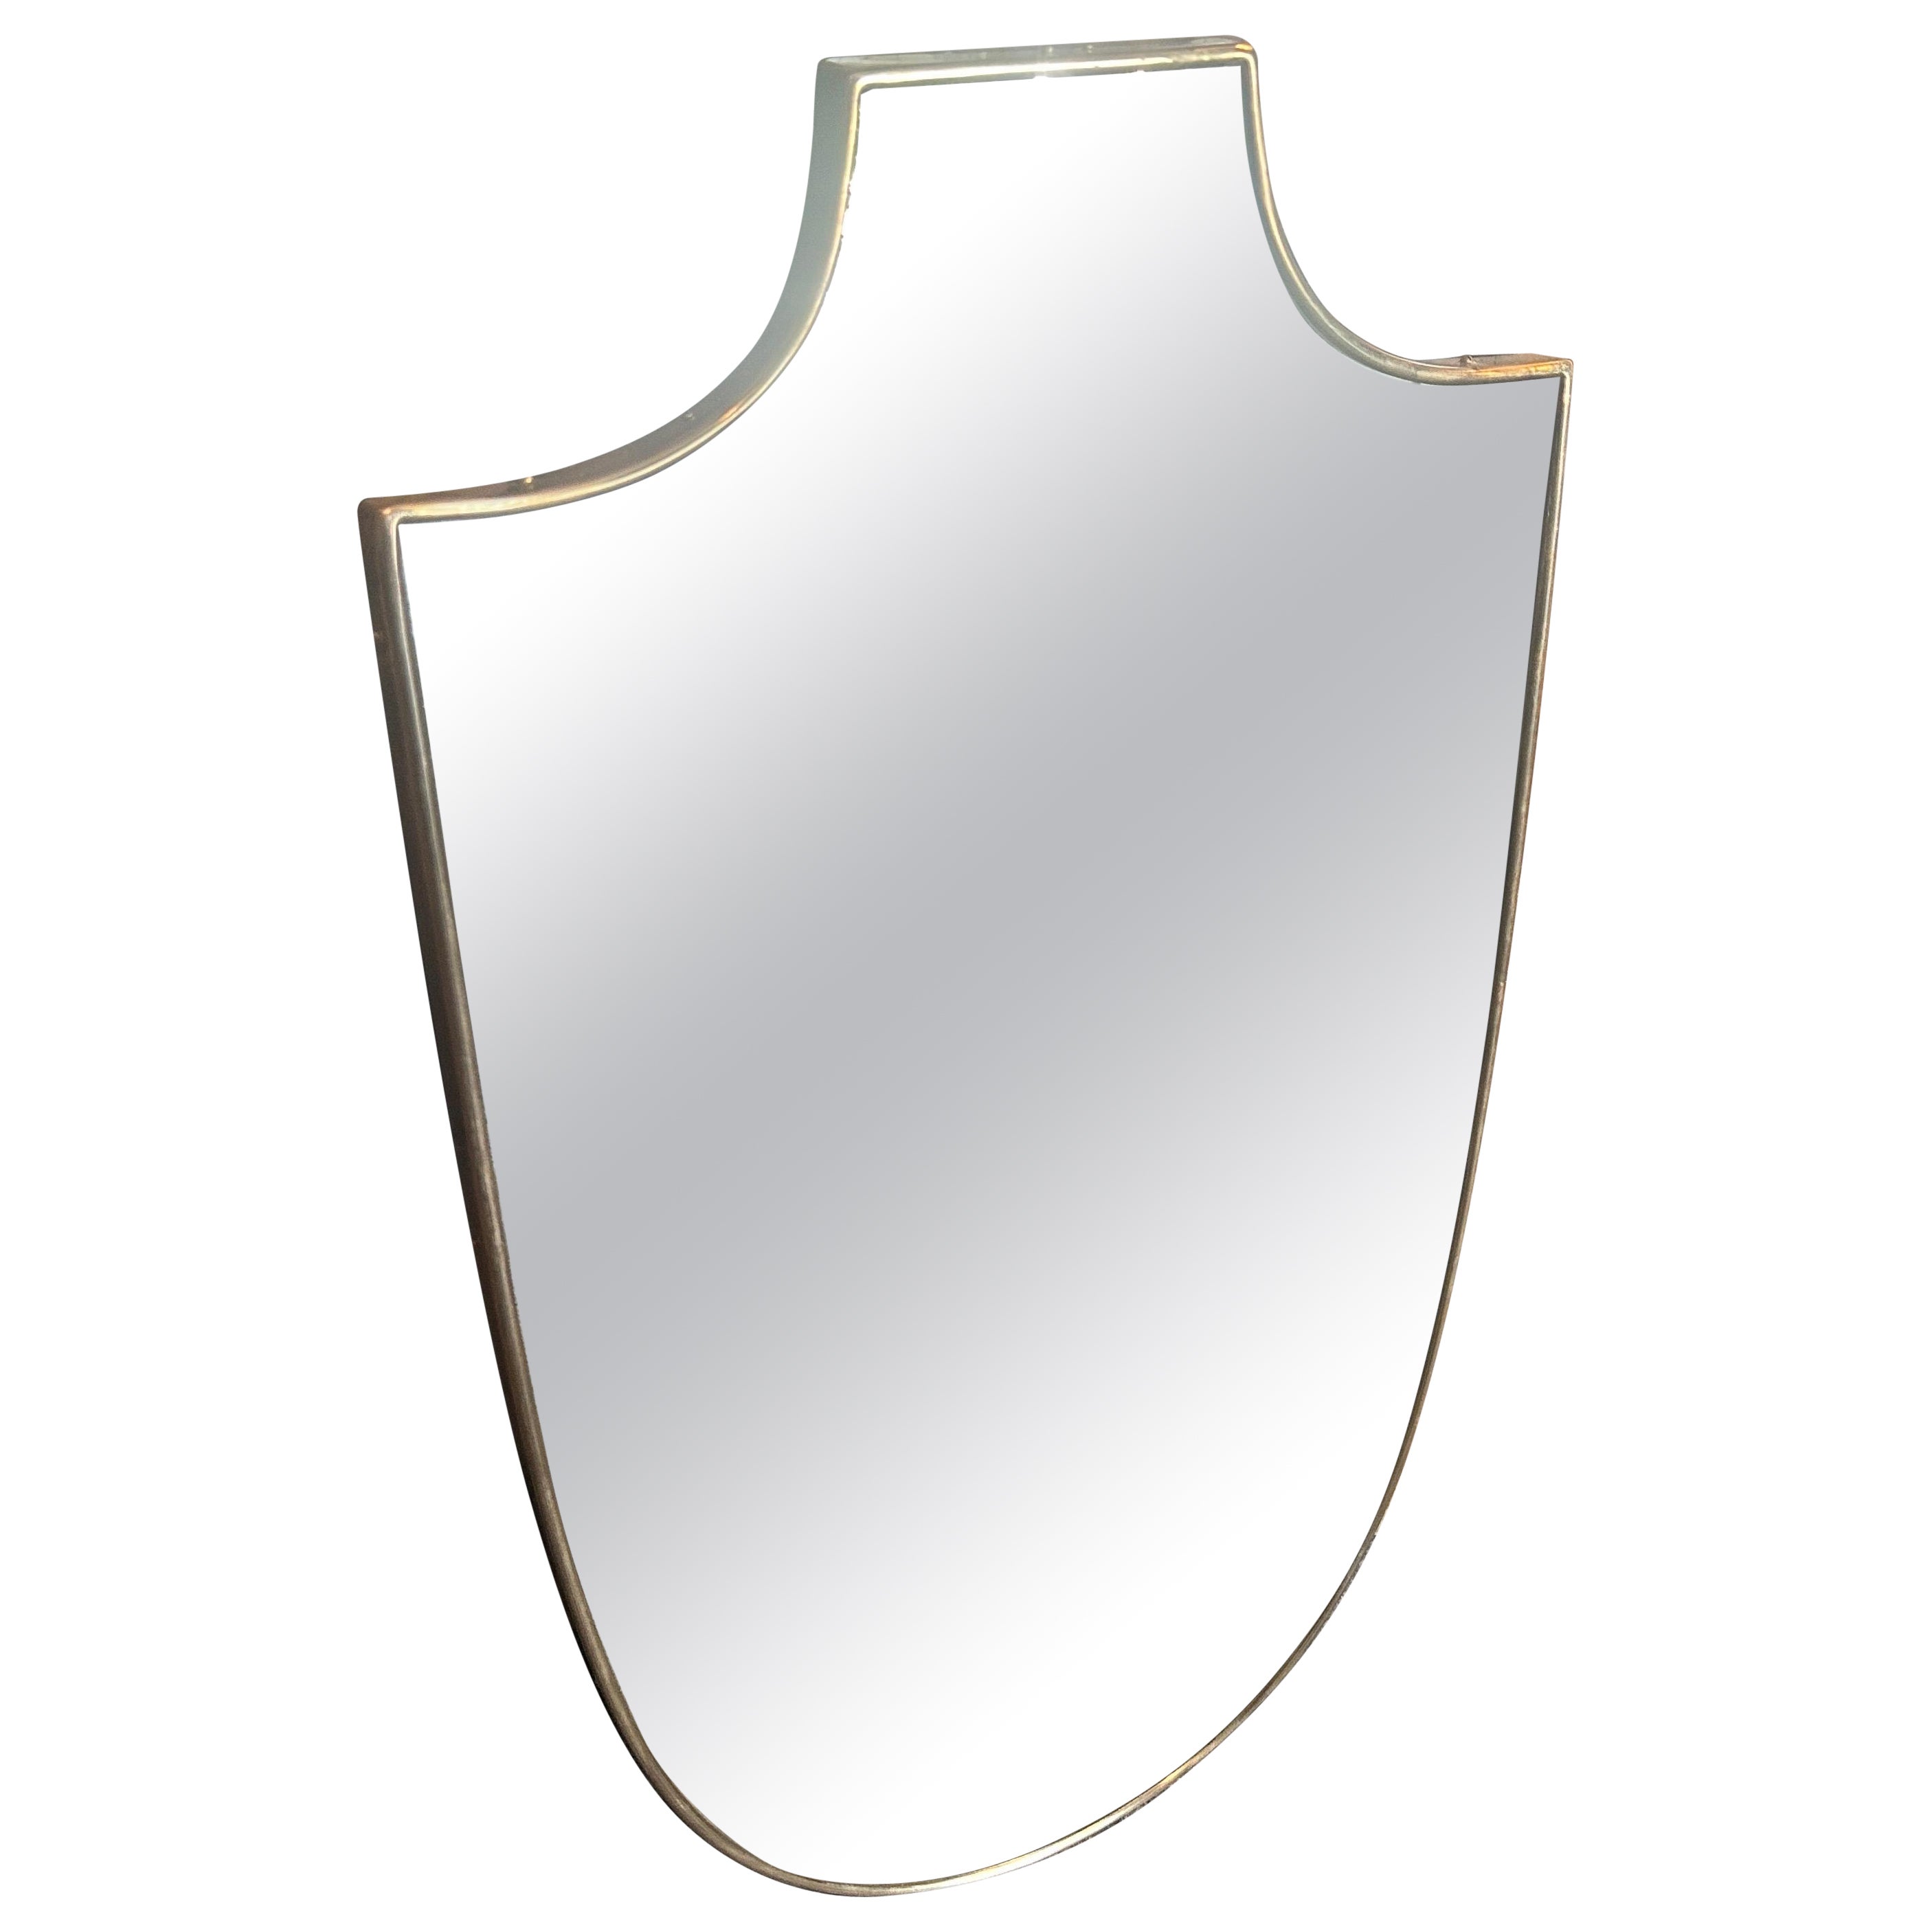 1950s Gio Ponti Style Mid-century Modern Brass Shield Shaped Wall Mirror